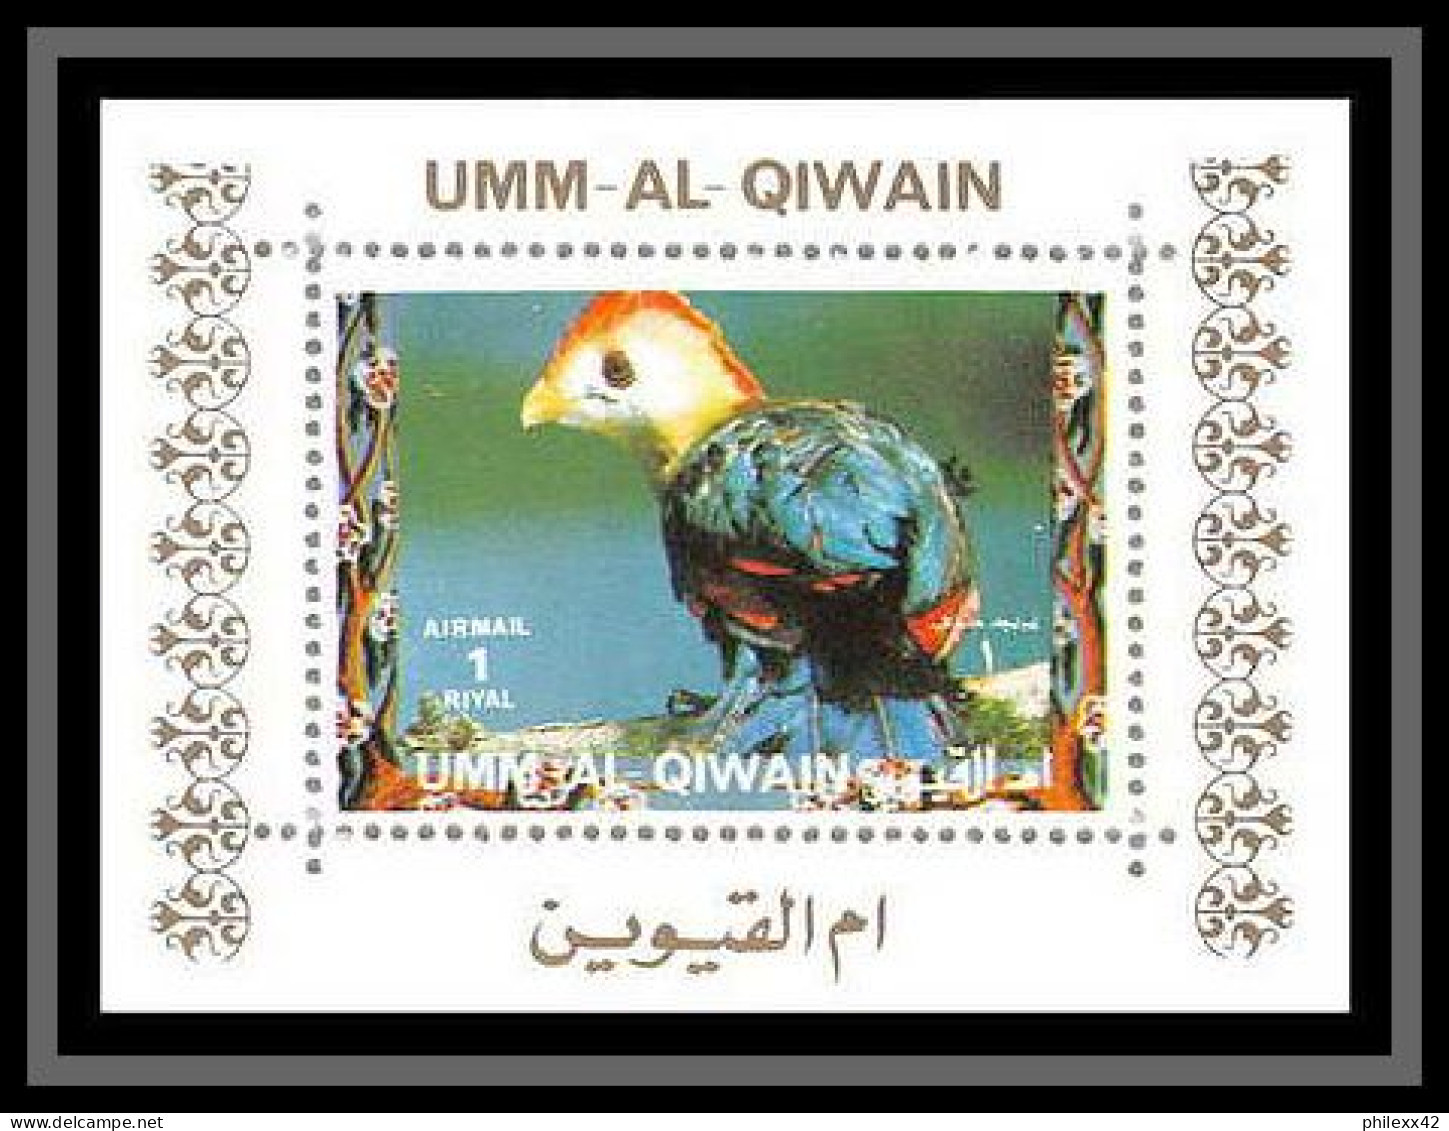 0057/ Umm al Qiwain deluxe blocs ** MNH michel N° 1402 / 1417 Parrots and Finches oiseaux (birds) tirage blanc white